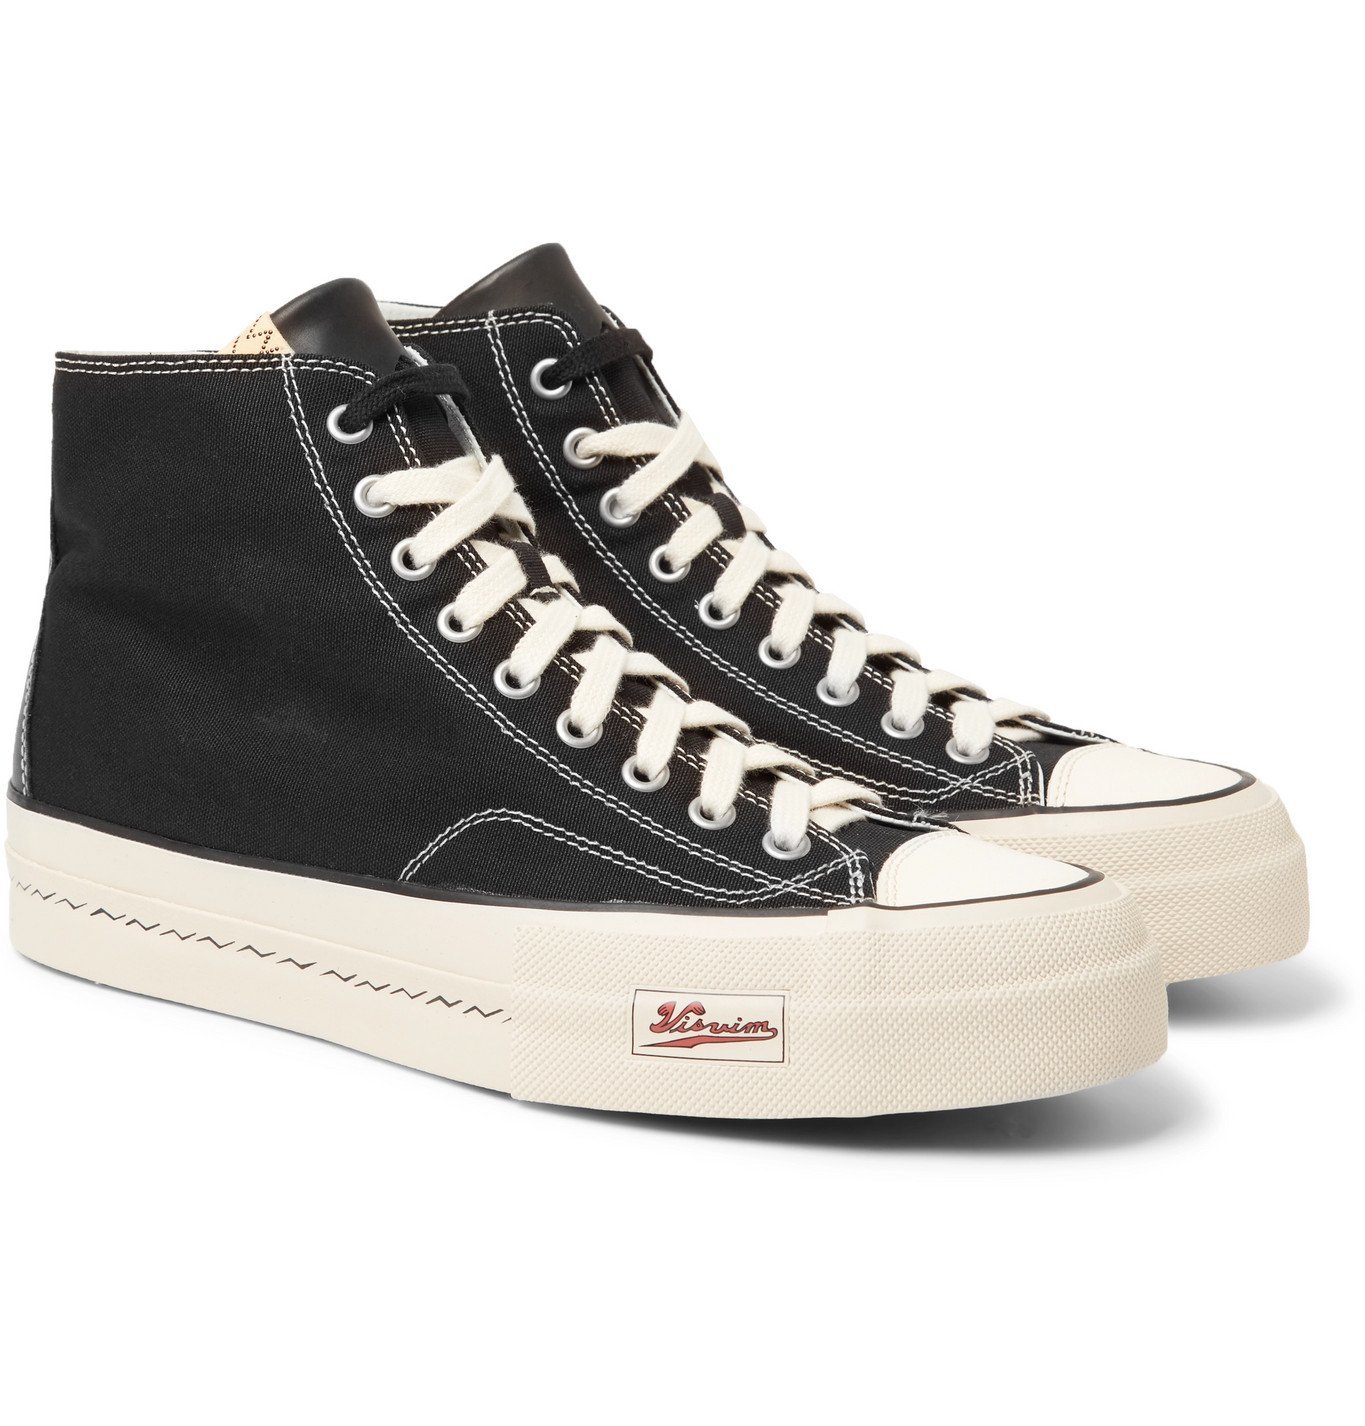 visvim - Skagway Leather-Trimmed Canvas High-Top Sneakers - Black 